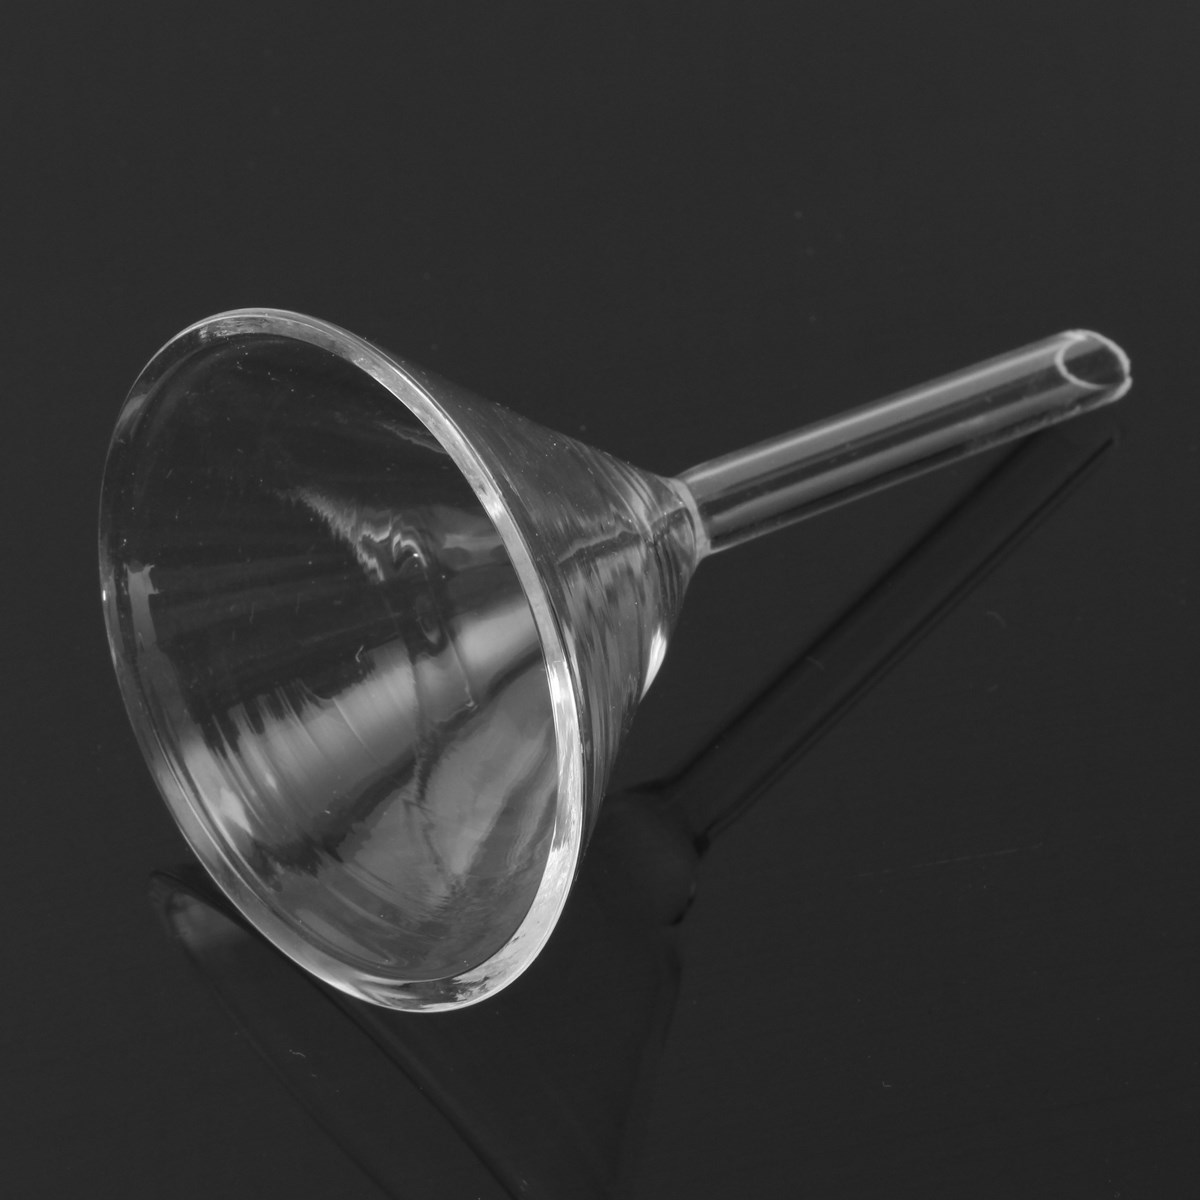 Kicute 1 St Beste 60mm Transparant Glas Driehoek Trechter Lab Glaswerk Laboraotry Chemie Educatief Briefpapier